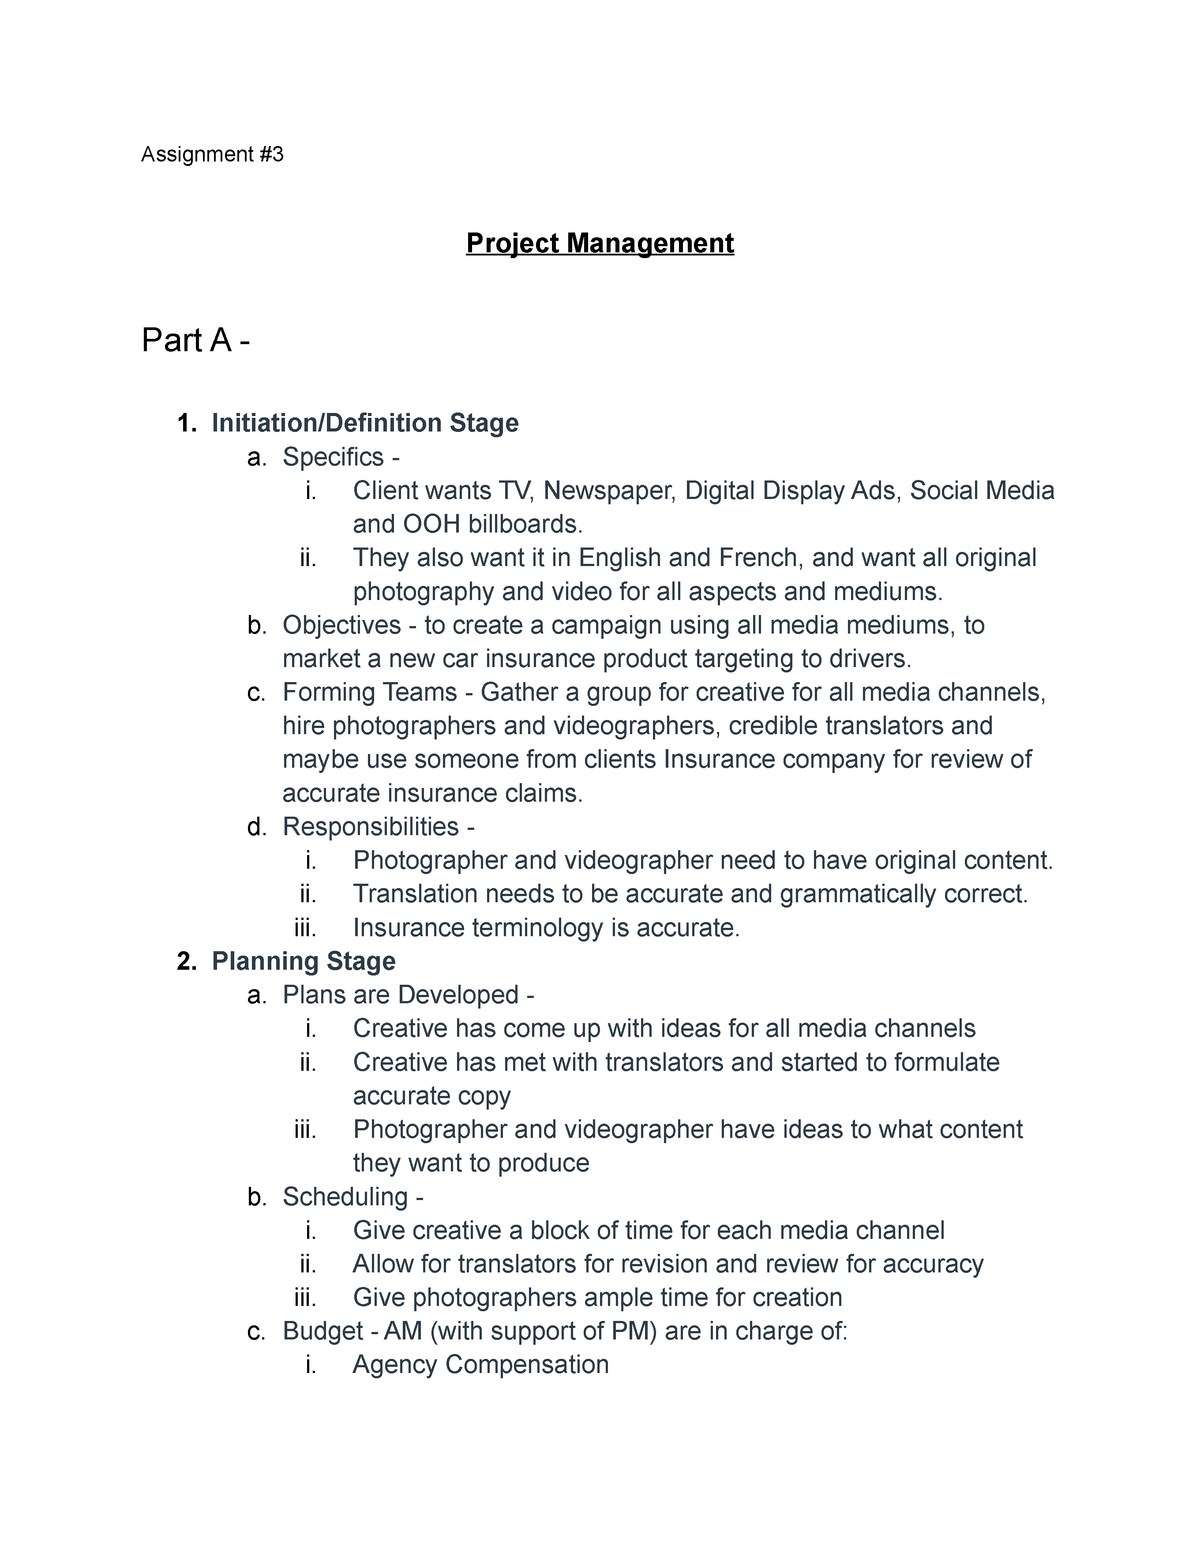 contoh assignment project management